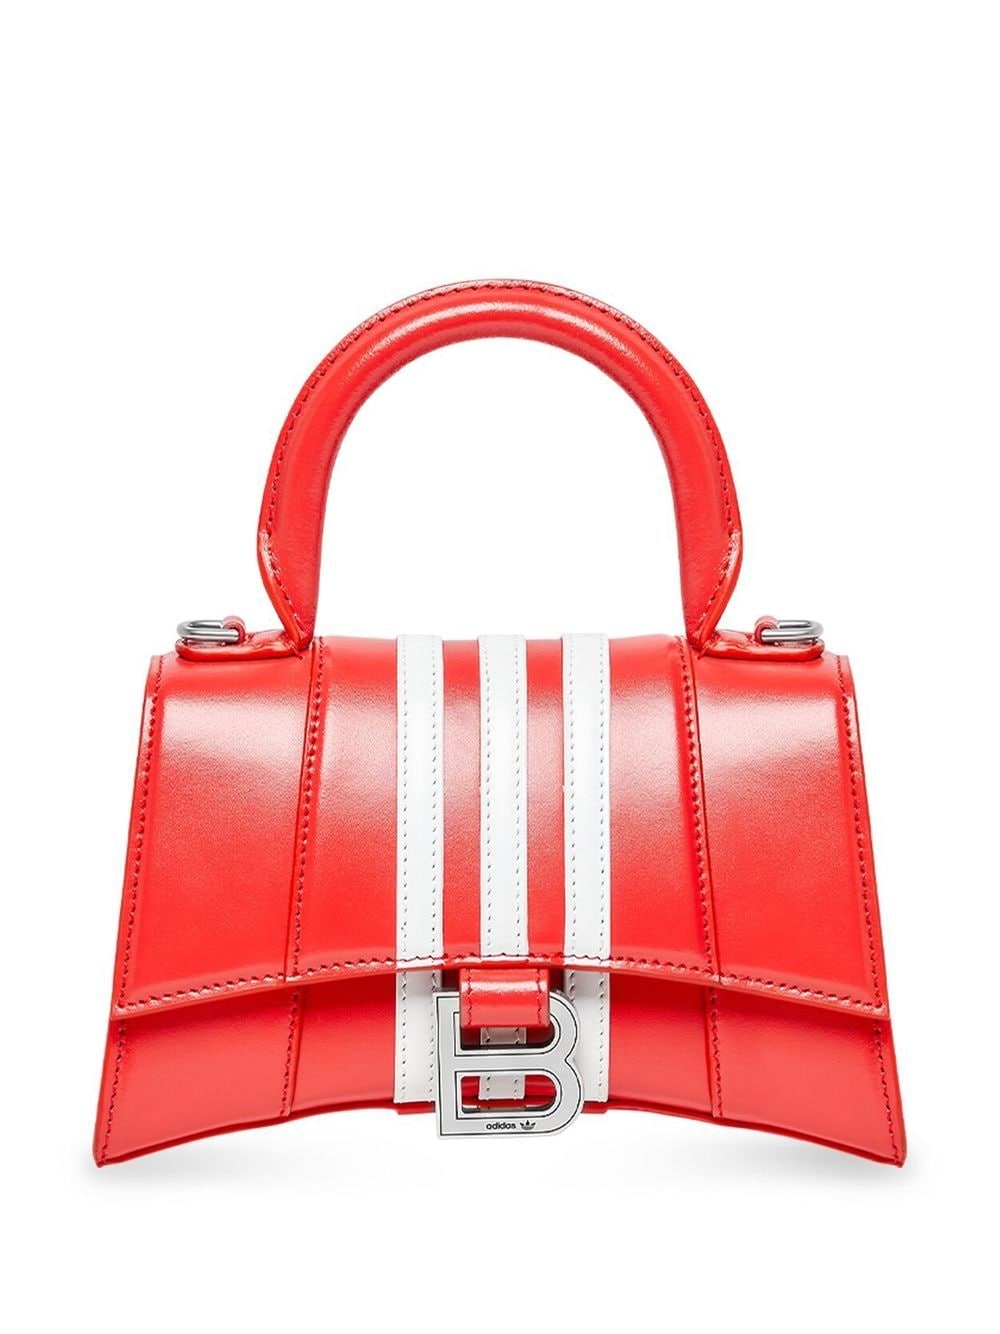 Balenciaga X Adidas Xs Hourglass Mini Bag In Red